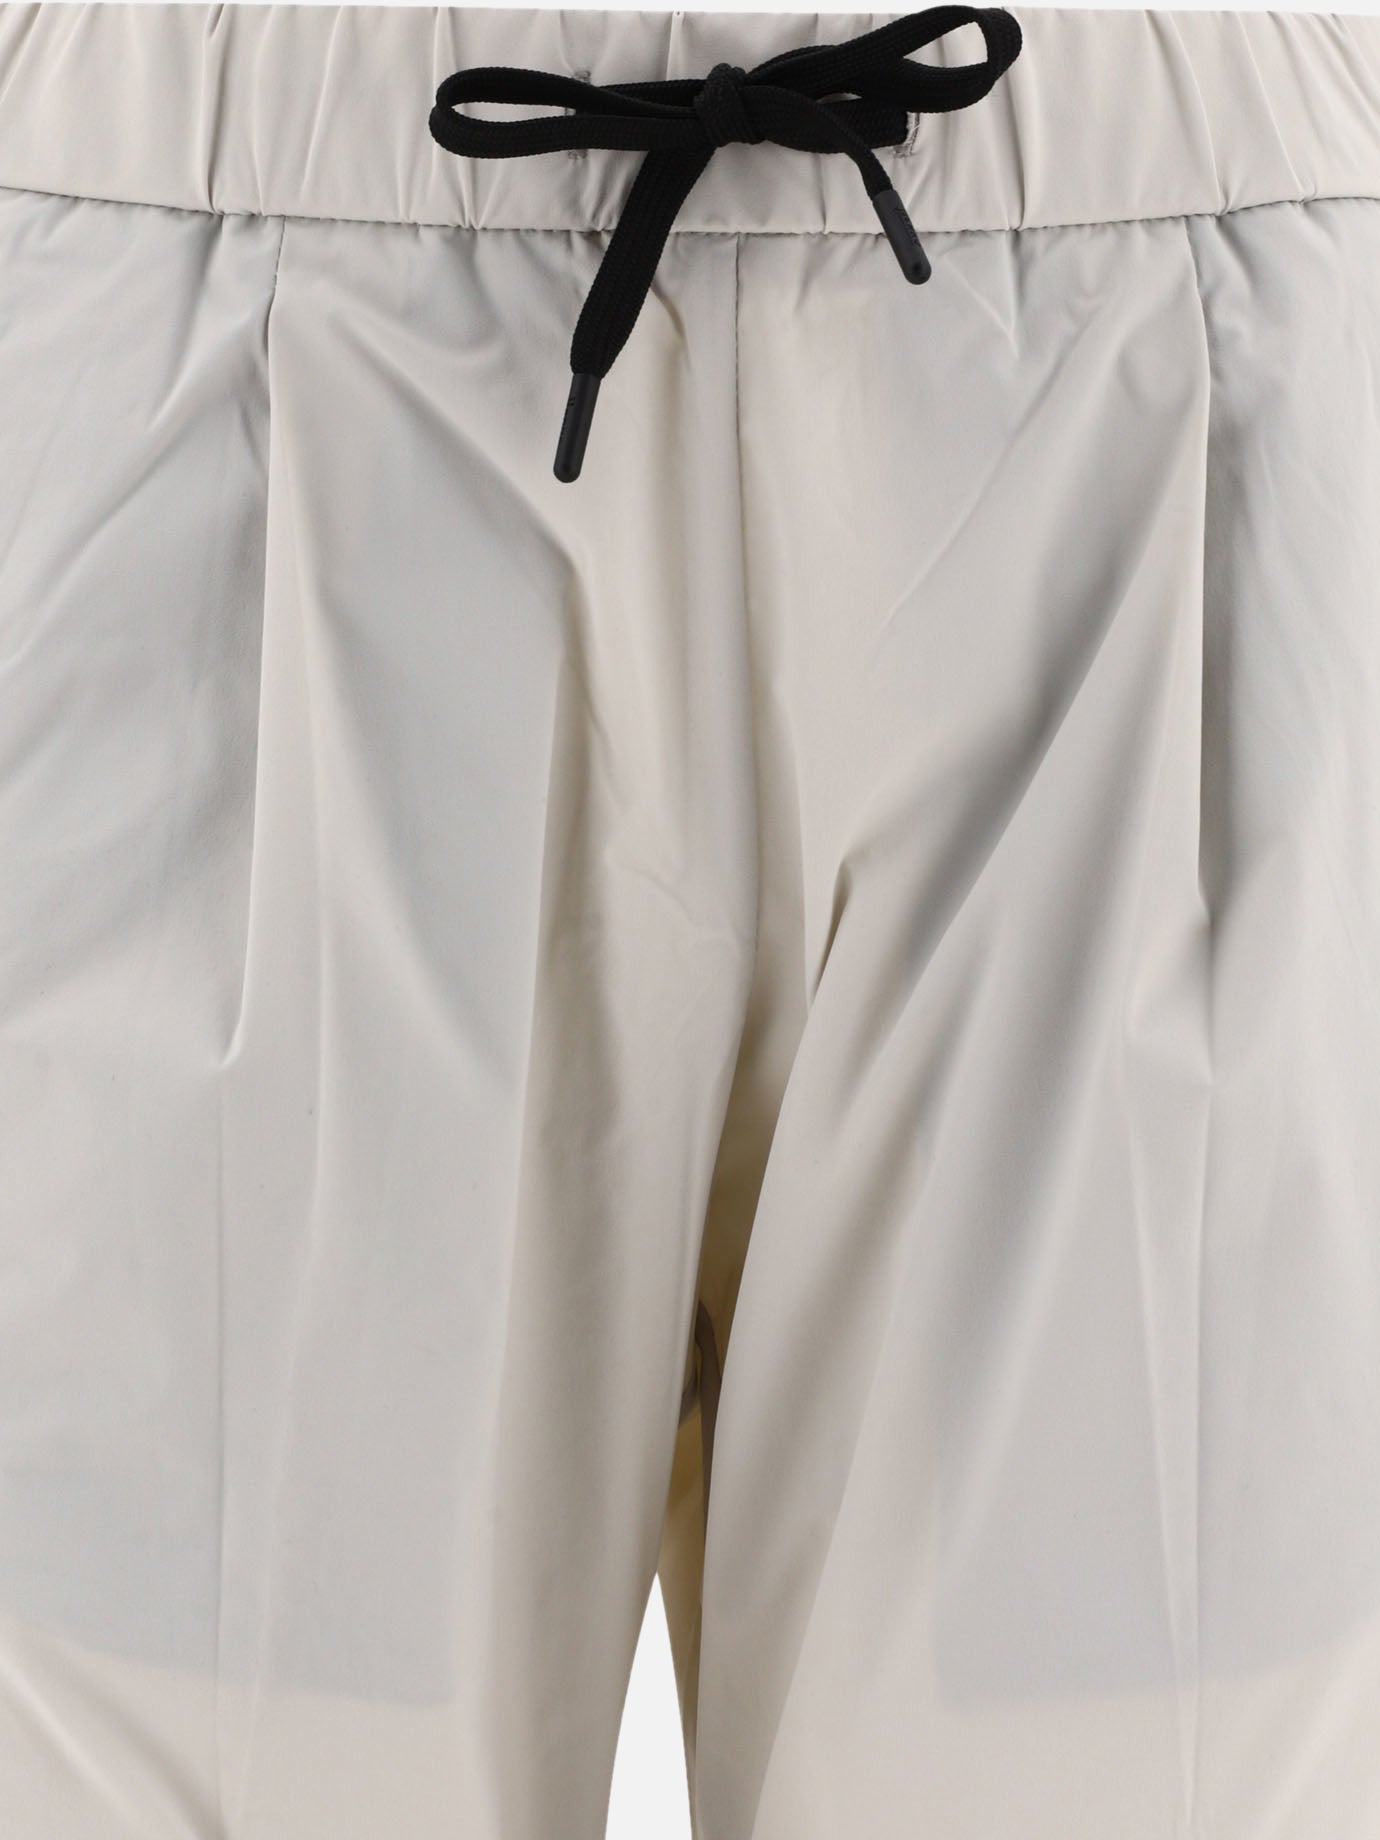 Laminar trousers in maestro nylon